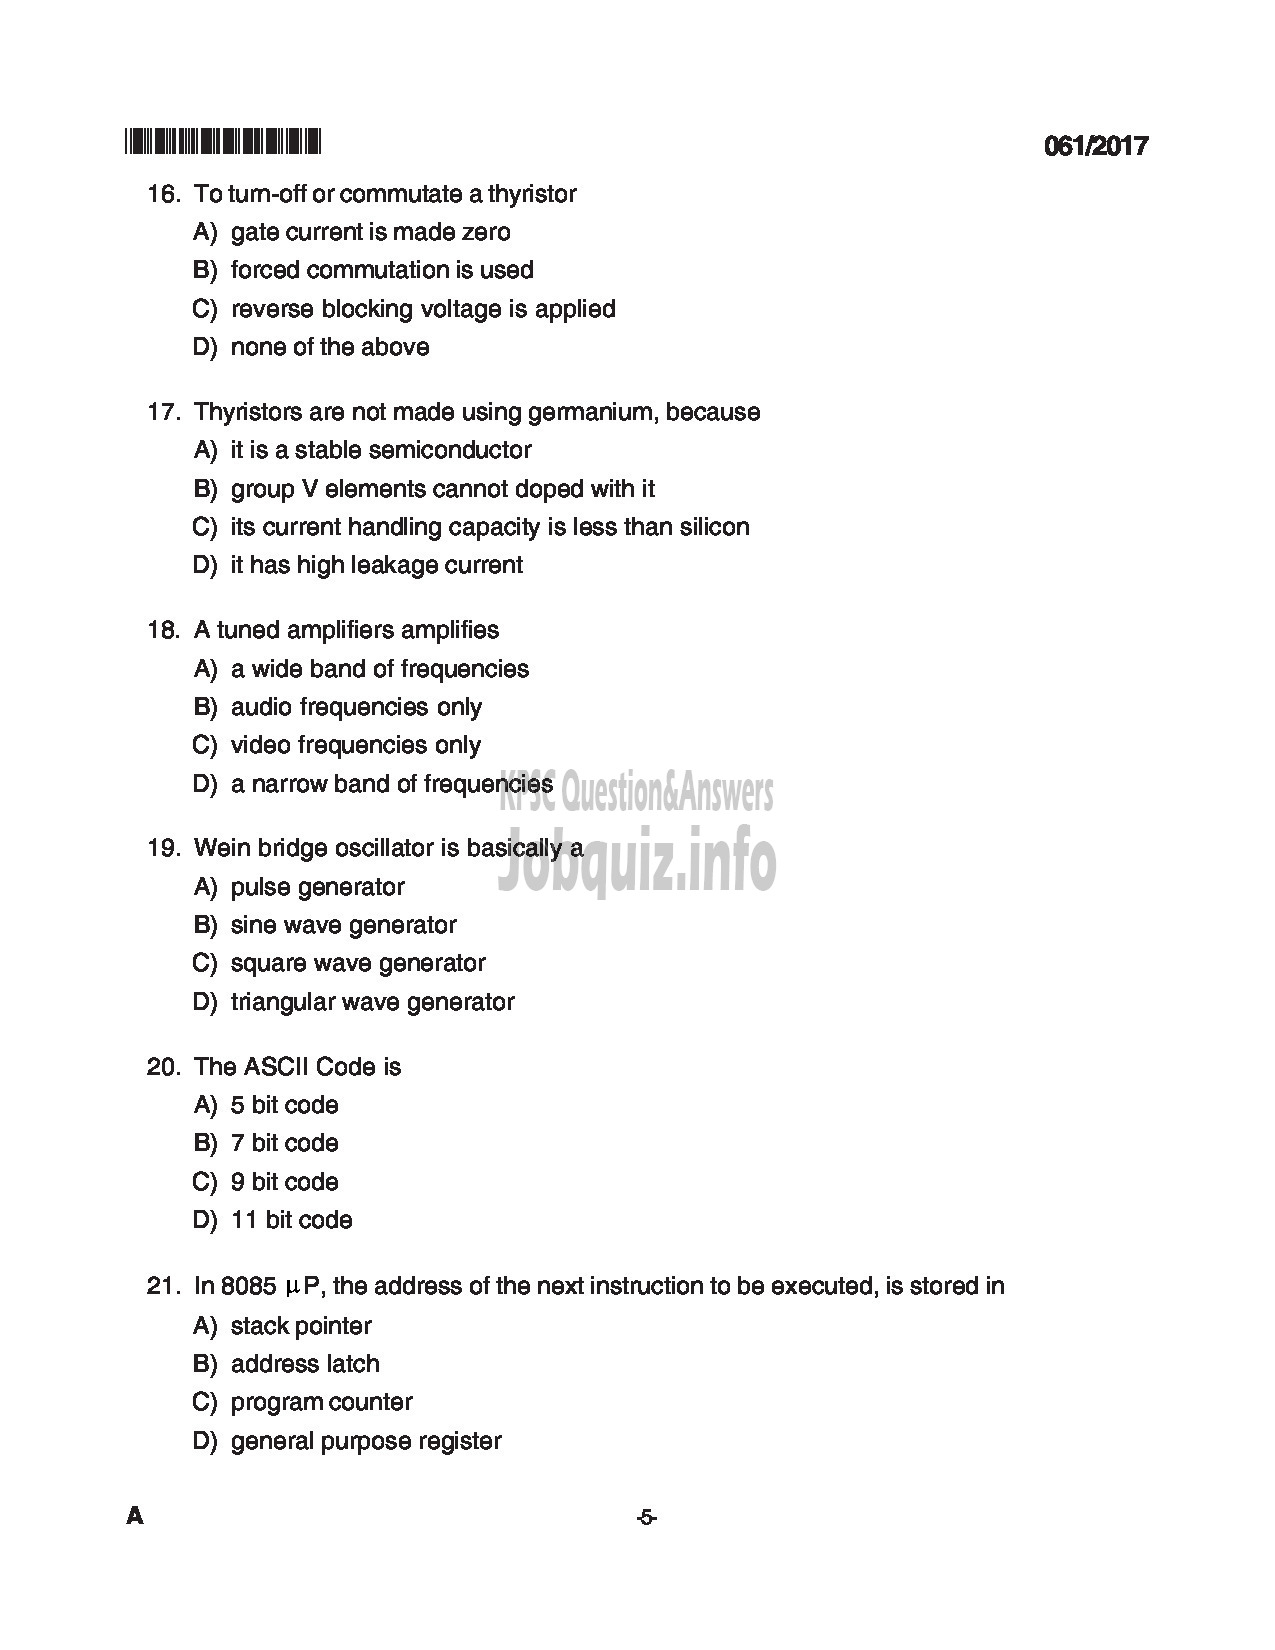 Kerala PSC Question Paper - TRADESMAN ELECTRONICS TECHNICAL EDUCATION QUESTION PAPER-5